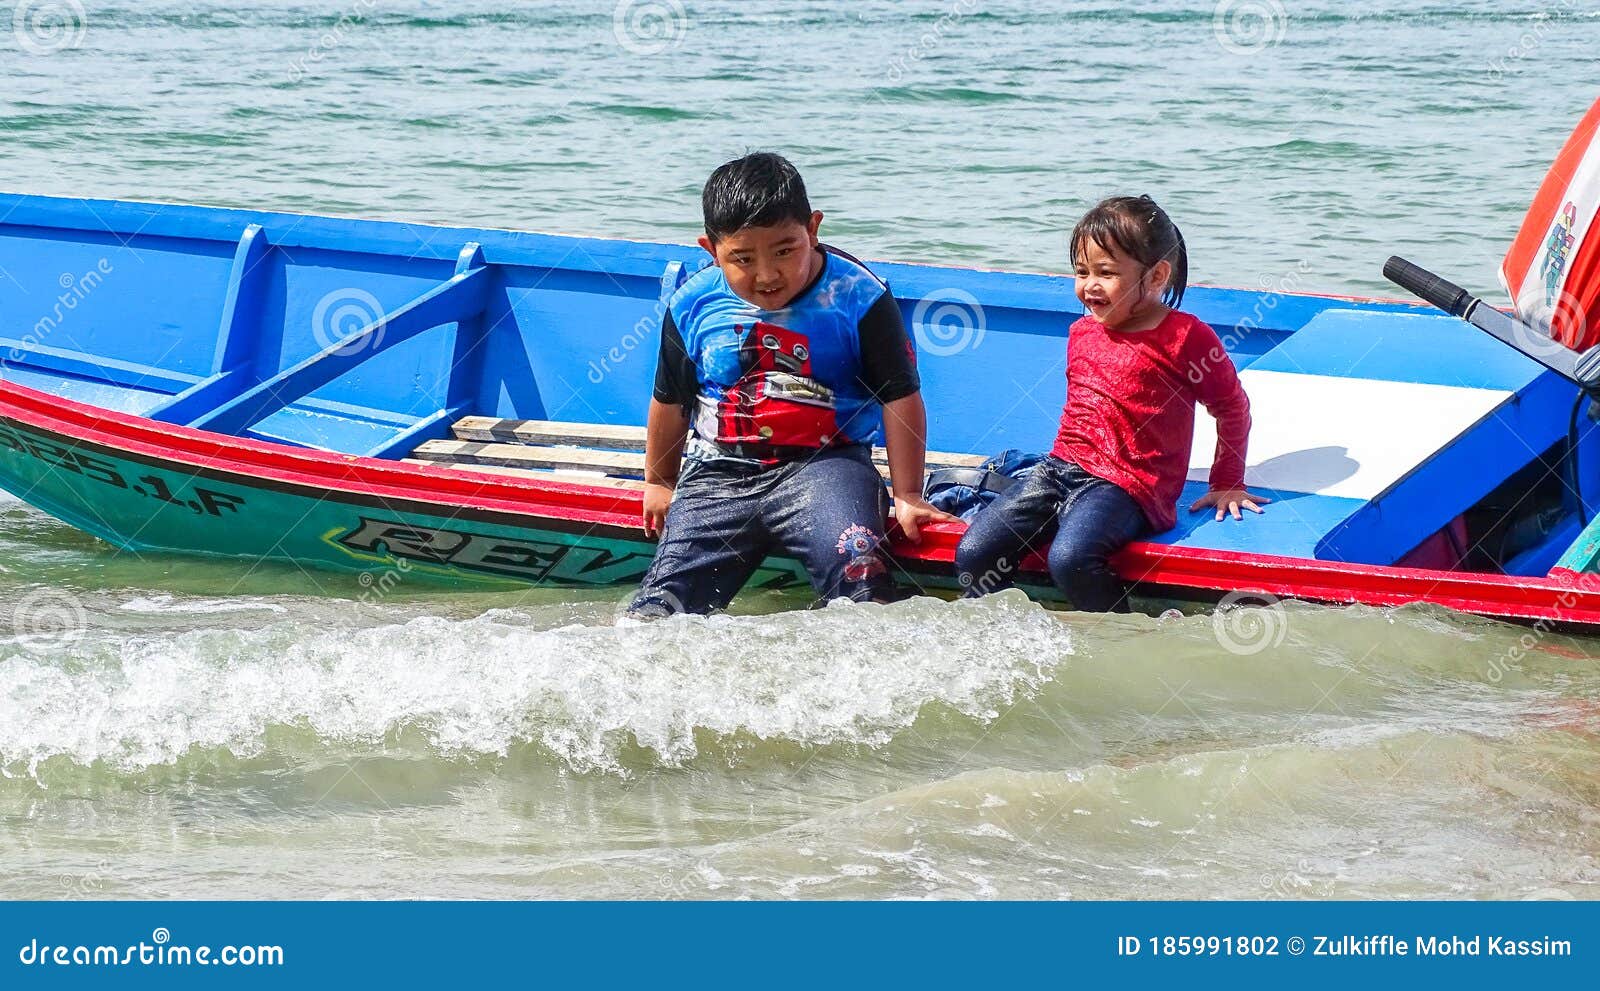 https://thumbs.dreamstime.com/z/labuan-malaysia-apr-asian-kids-playing-sea-water-traditional-fishing-boat-island-185991802.jpg